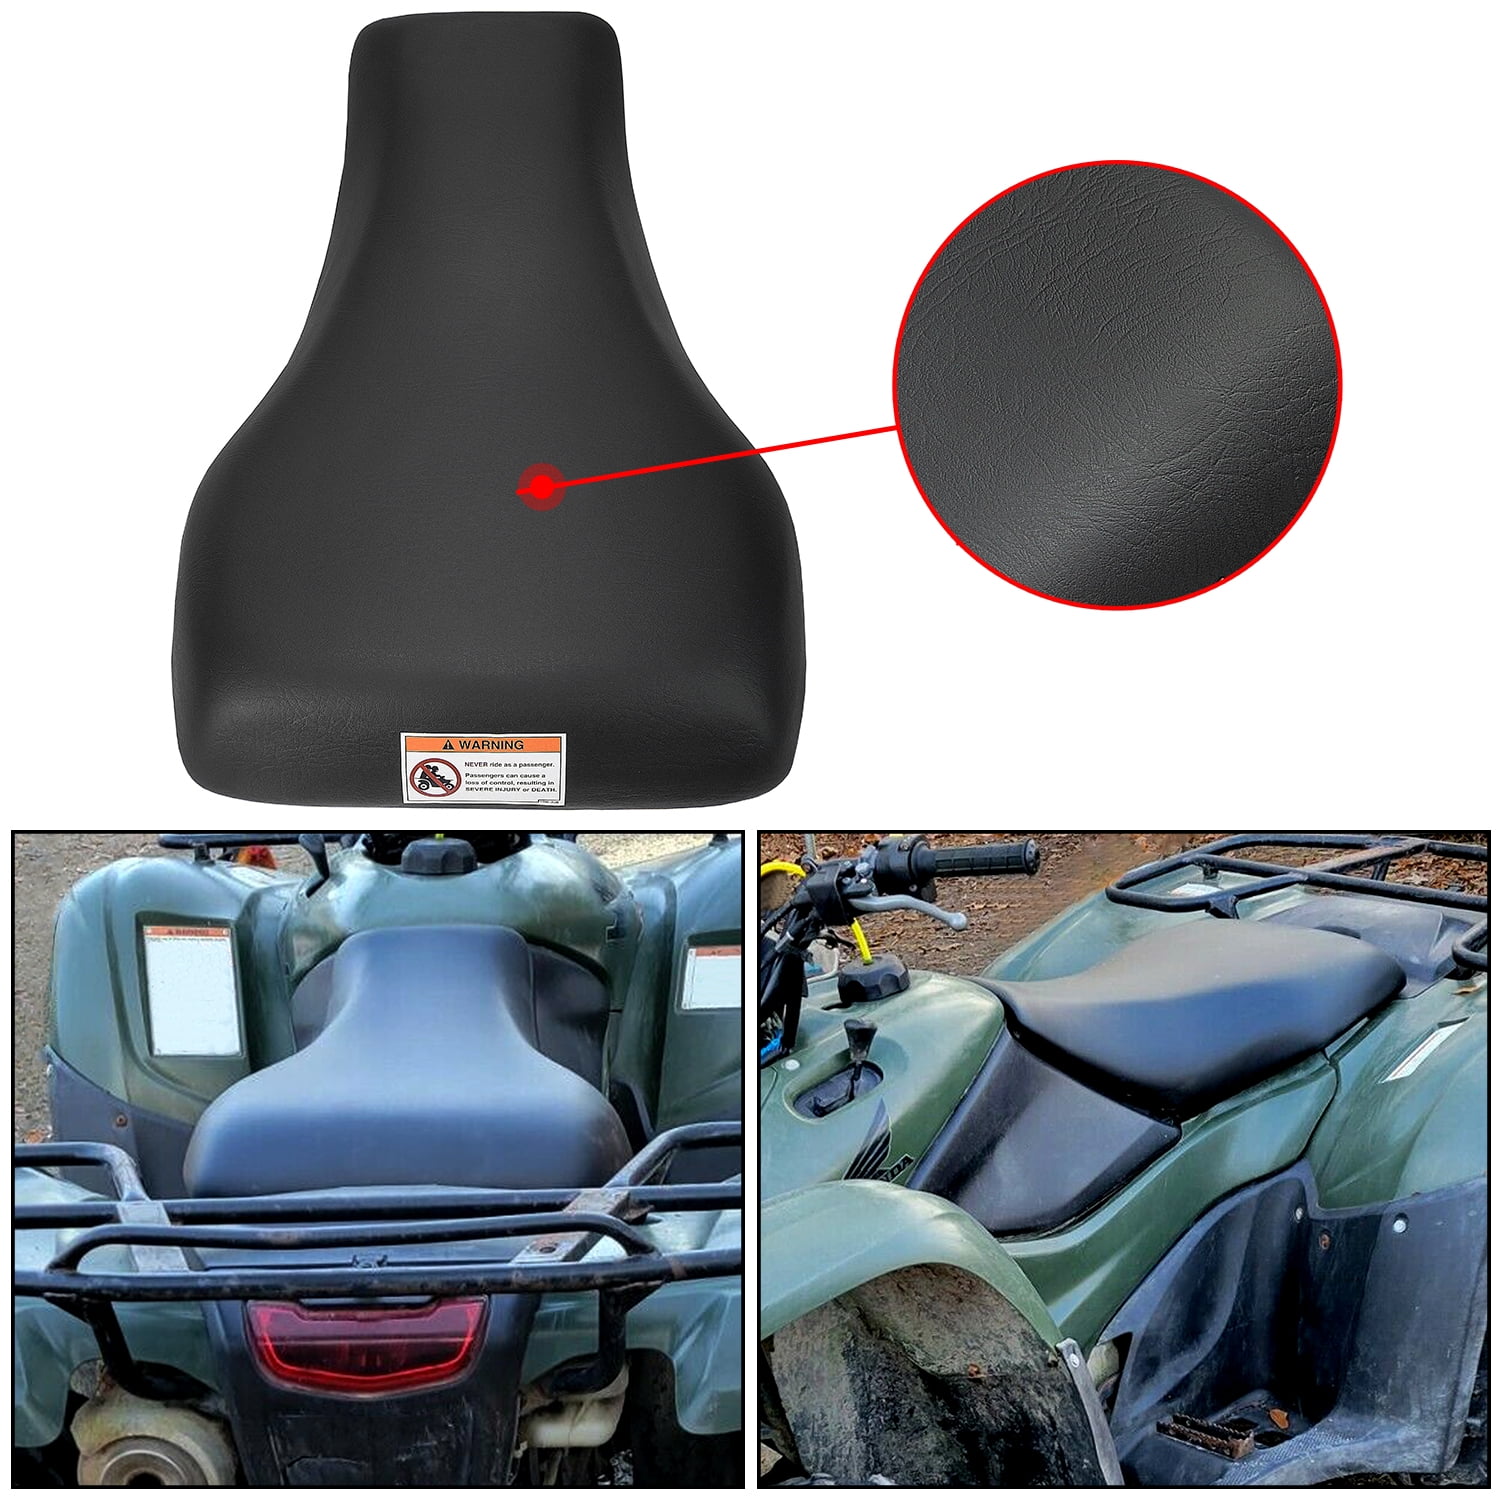 Quad Works Seat Cover Black for Honda Rancher 420 2x4 ES 2007-2014 